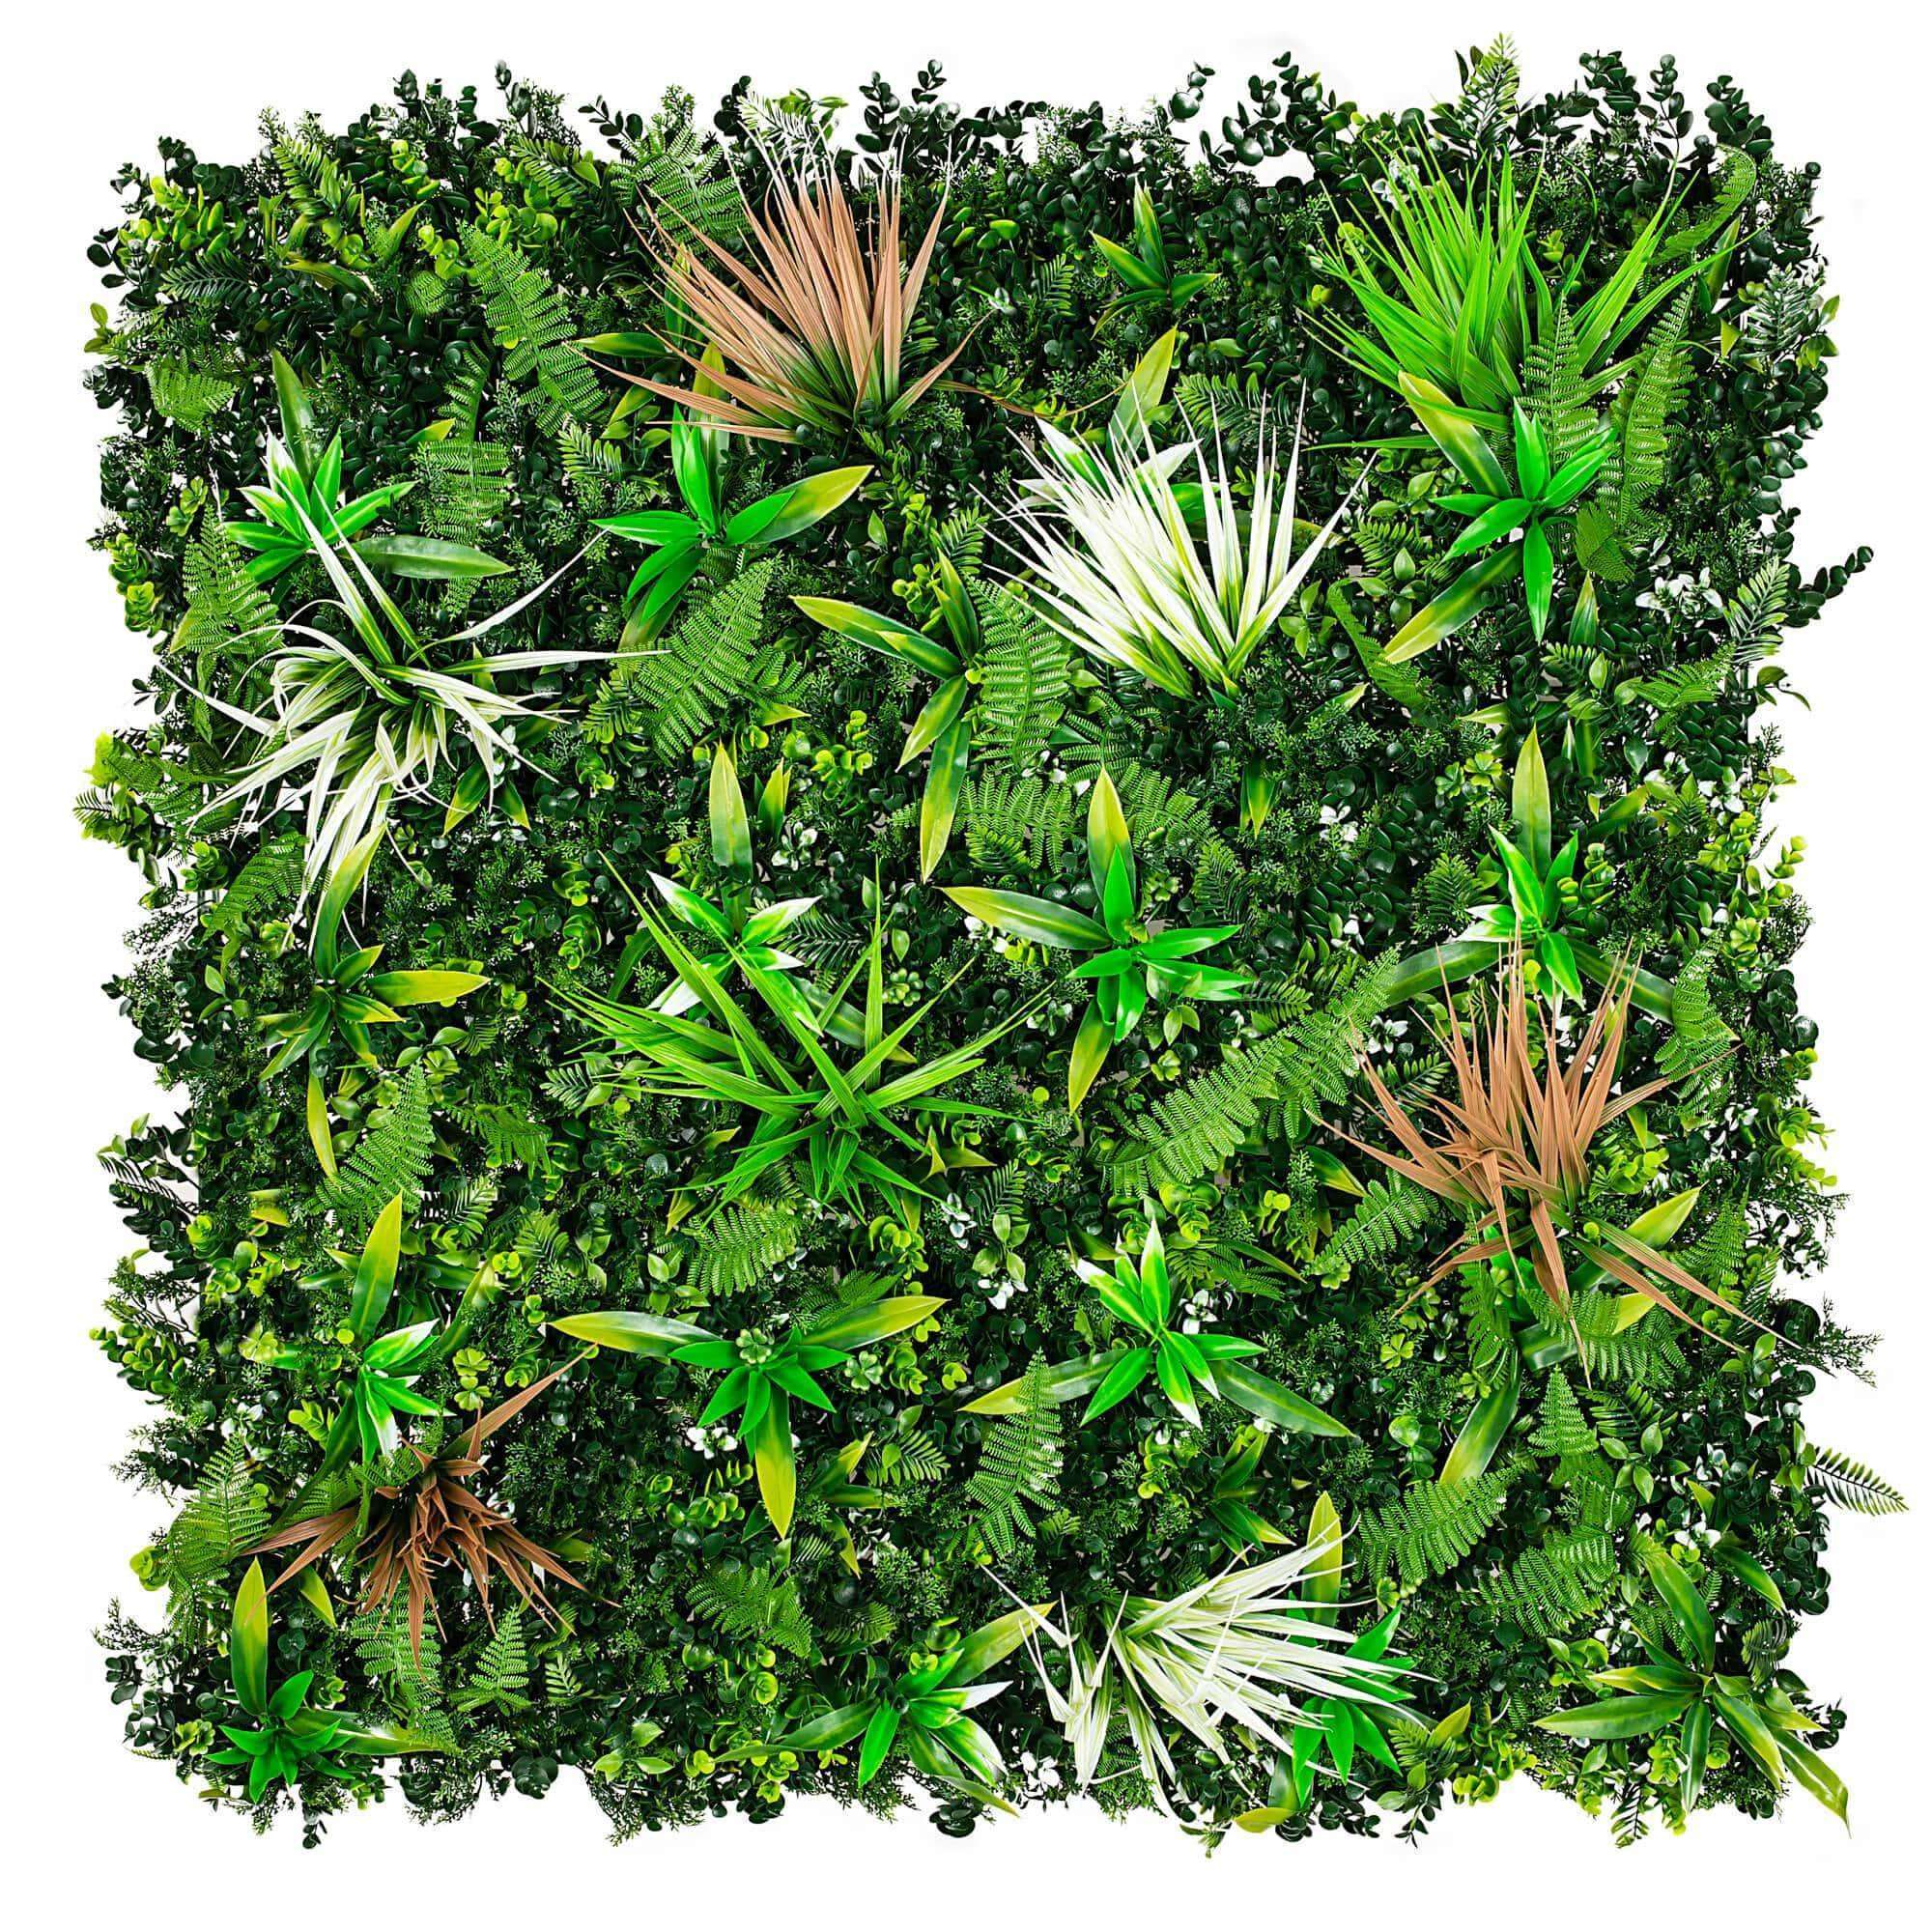 wild-tropics-artificial-vertical-garden-fake-green-wall-1m-x-1m-uv-resistant-216528.jpg